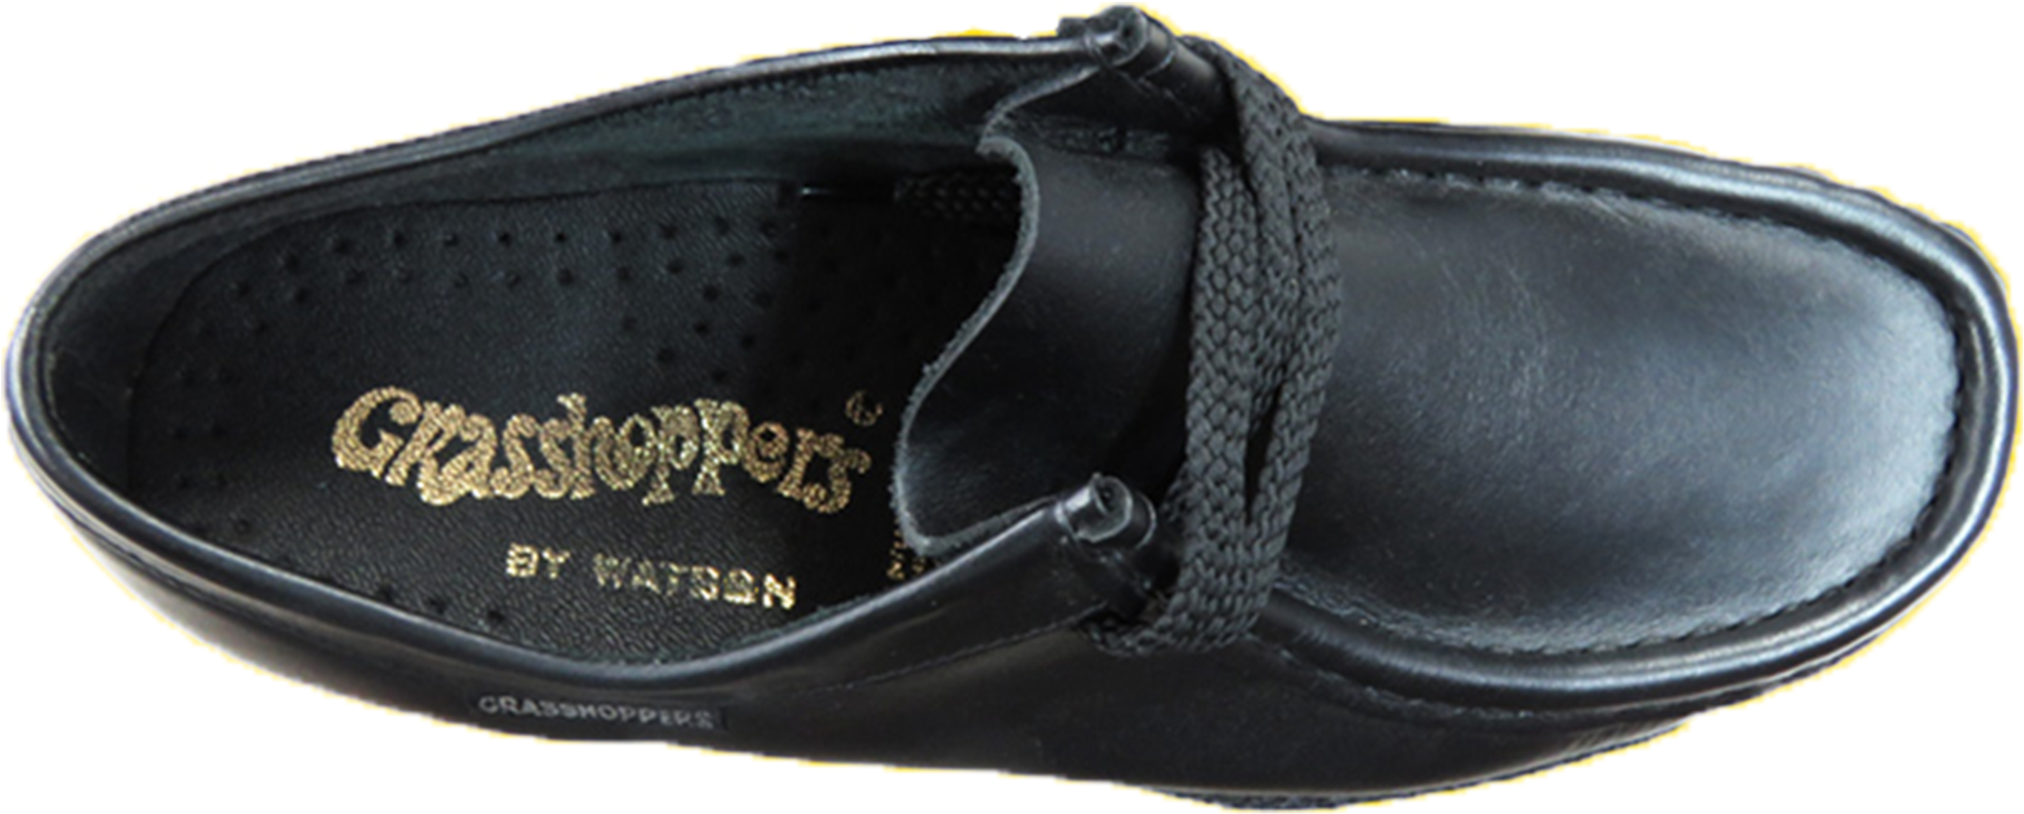 Grasshopper Lace Up School Shoes - Slip-on Shoe (2048x1365), Png Download